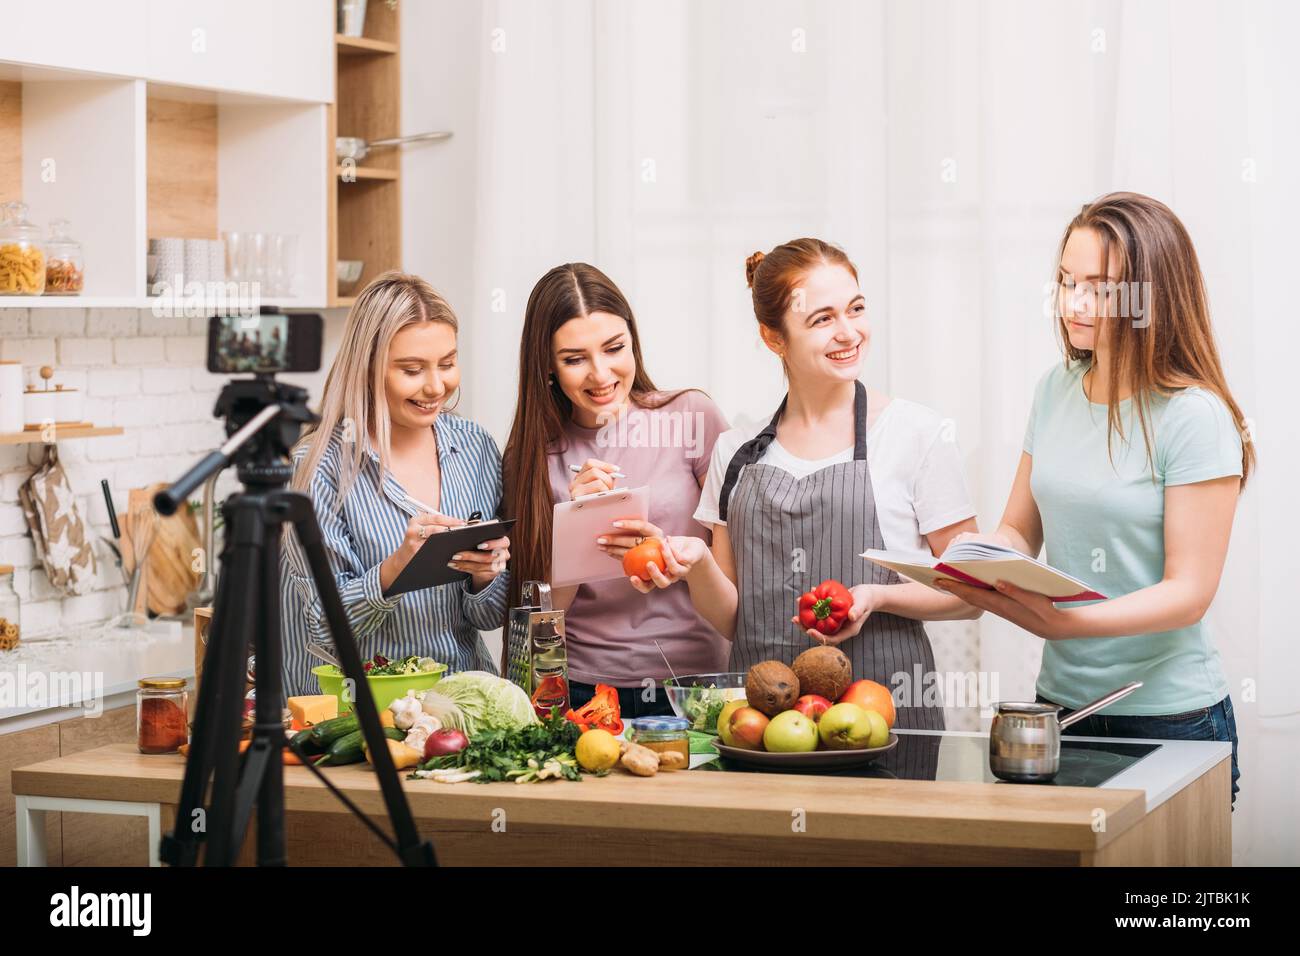 healthy nutrition lifestyle blogging recipe video Stock Photo